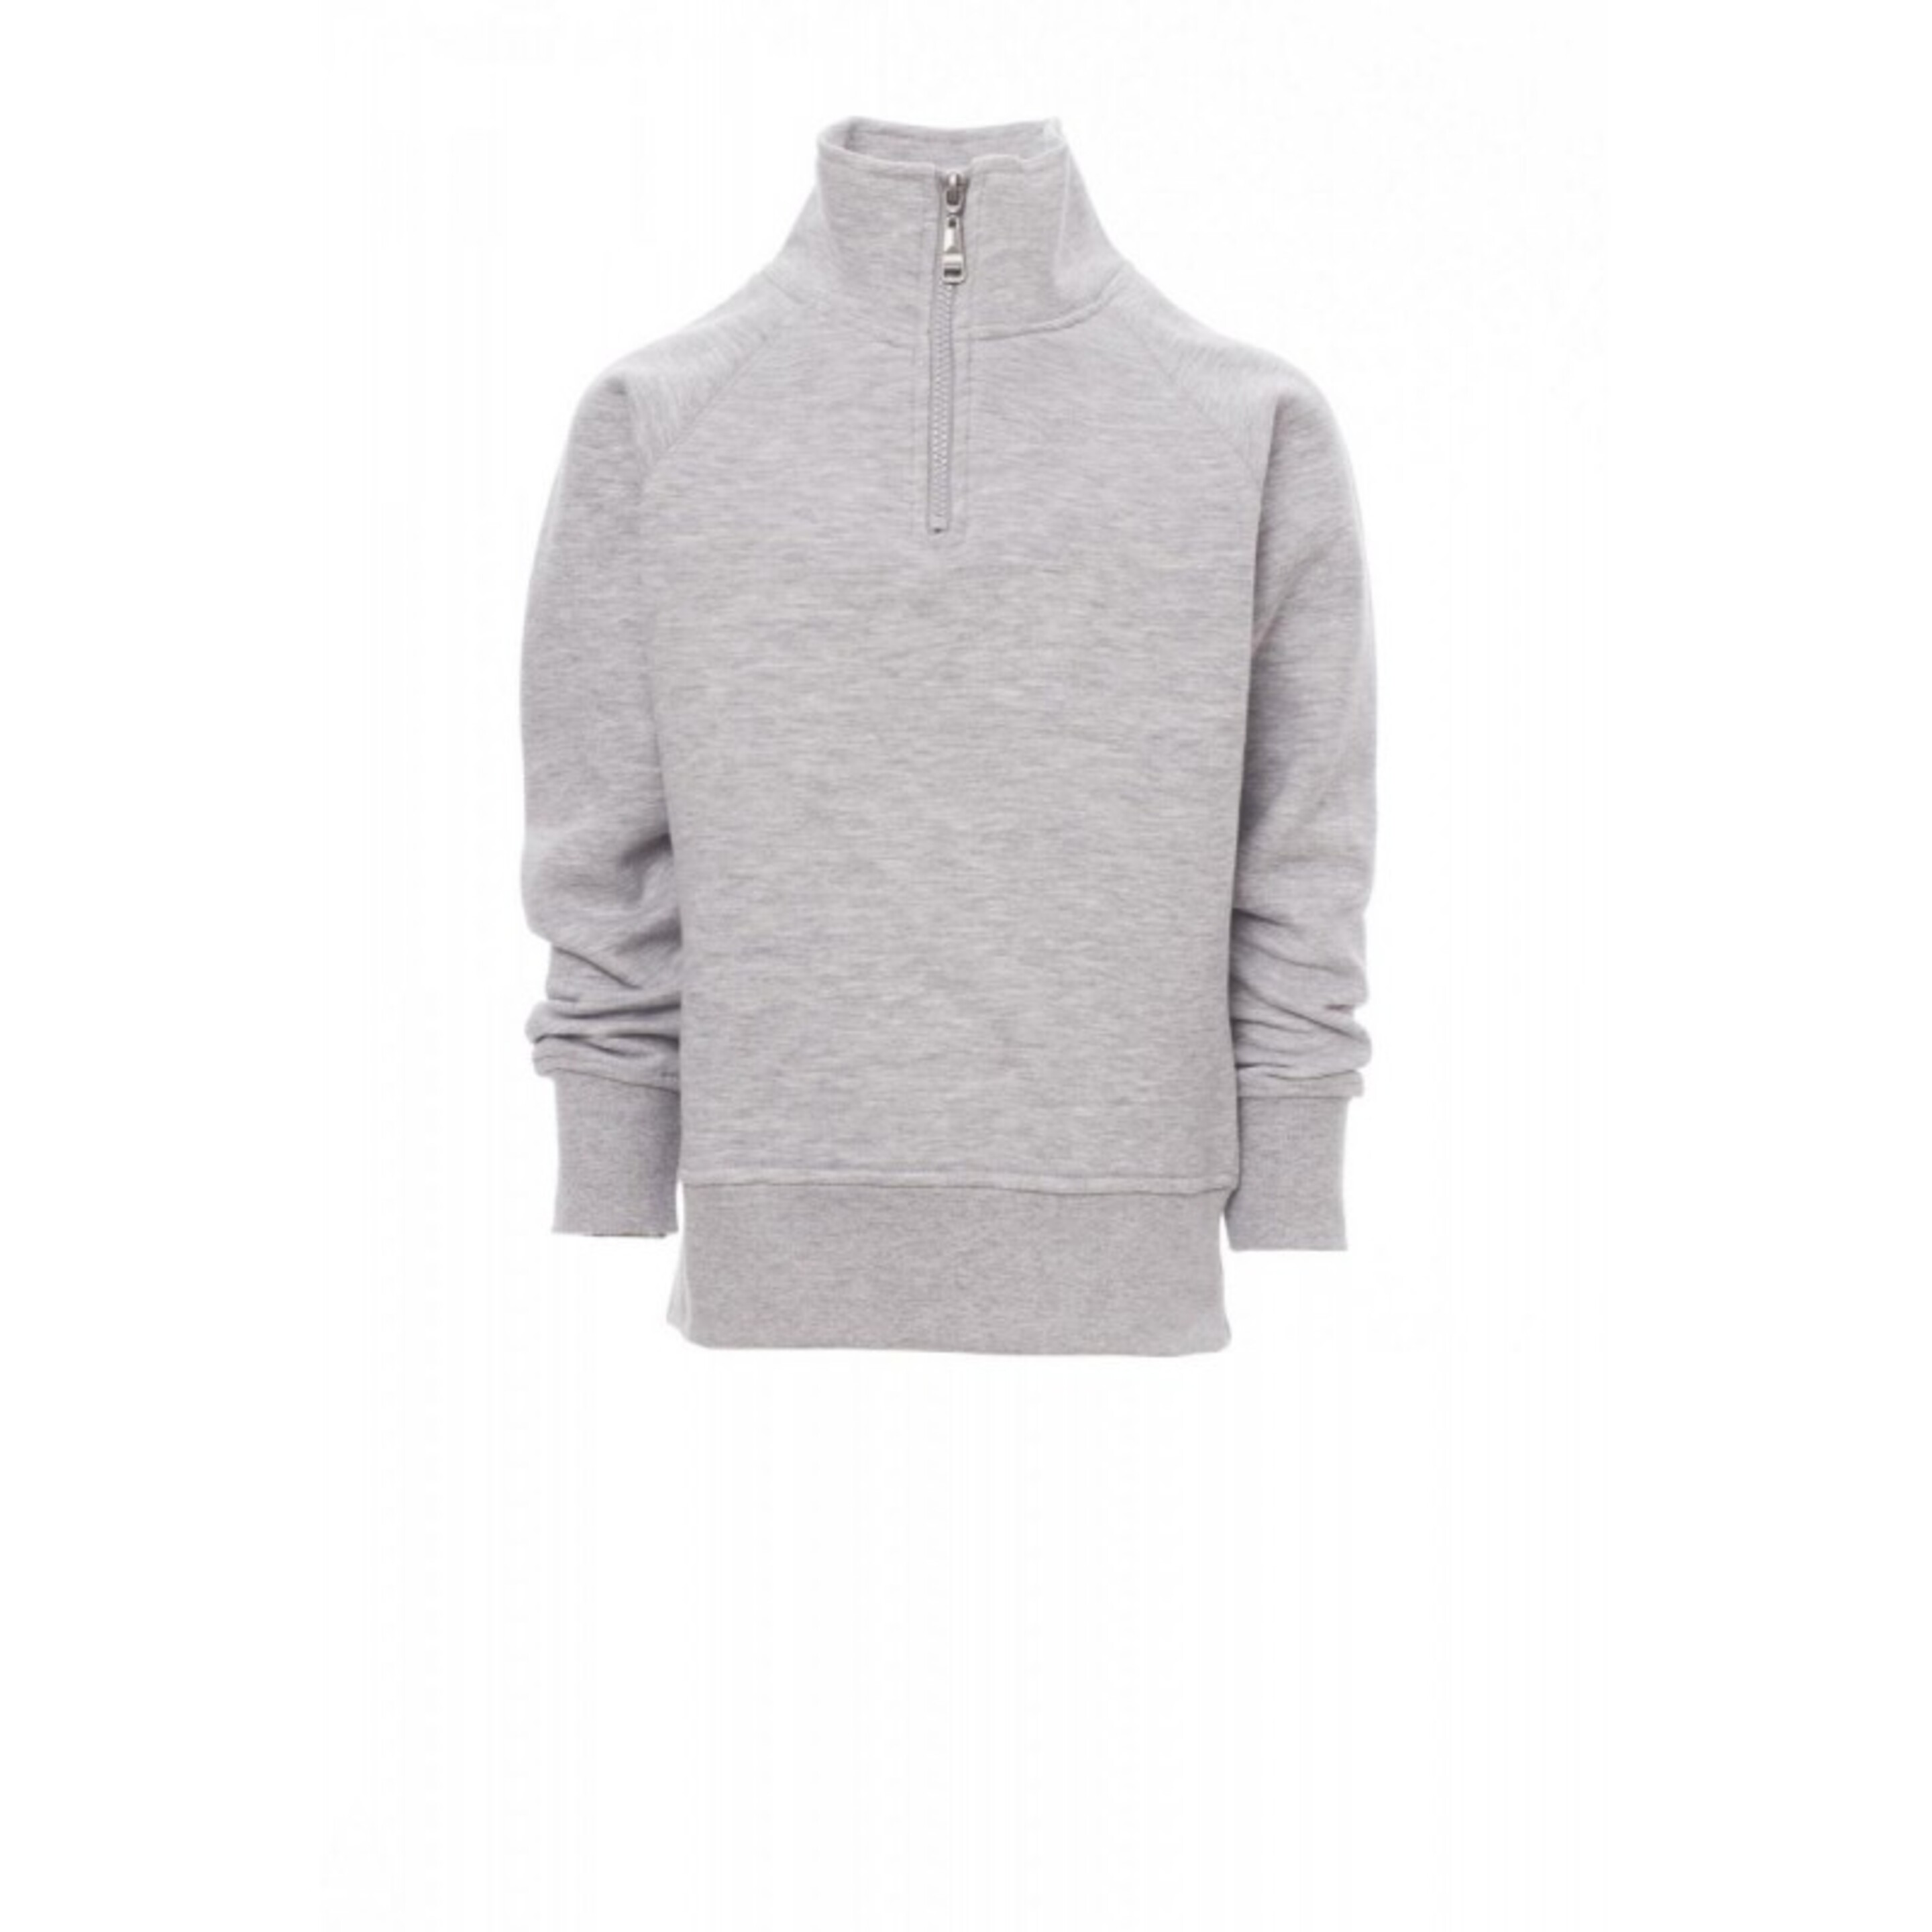 Sweatshirts 300gr Zico  Quilted - gris-mezclado - 